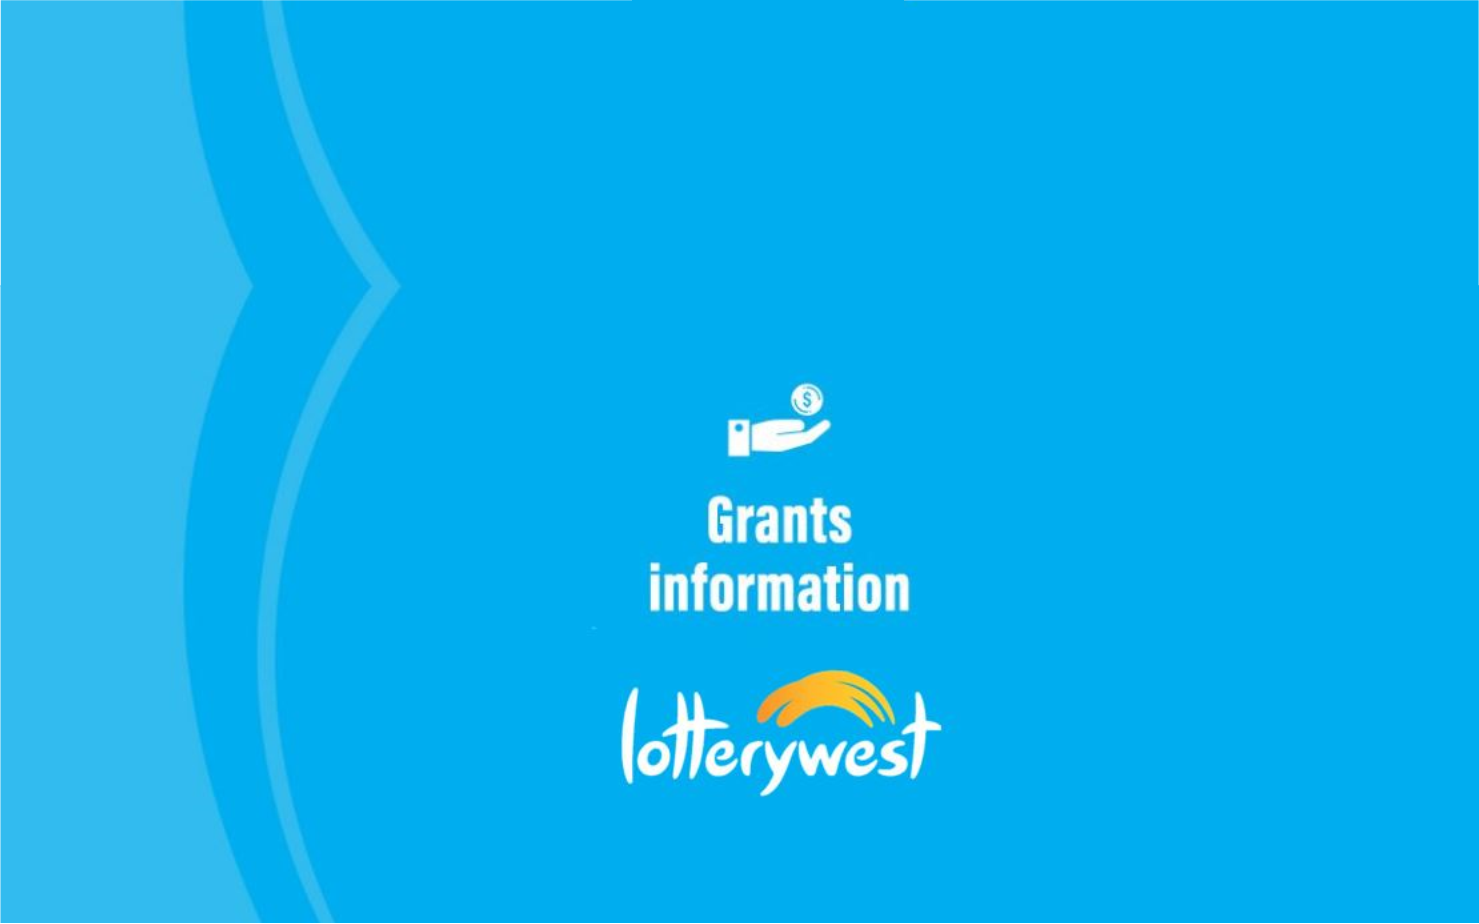 Lotterywest Grant Information